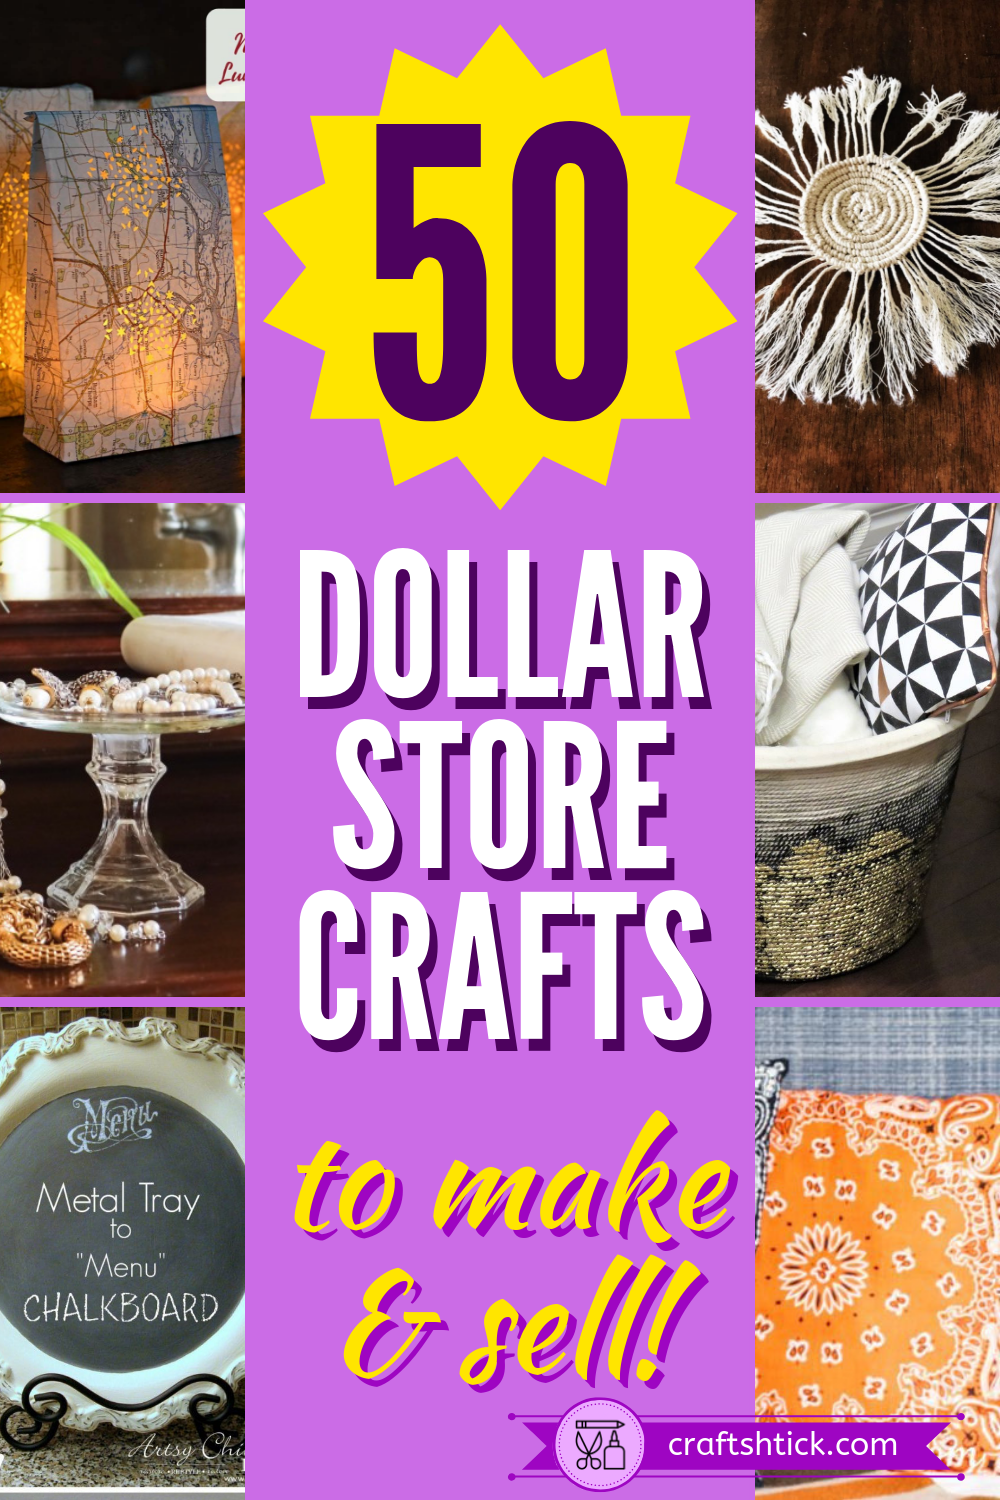 Dollar Tree Crafts And DIY Projects • Craft Shtick -   21 diy Dollar Tree crafts ideas